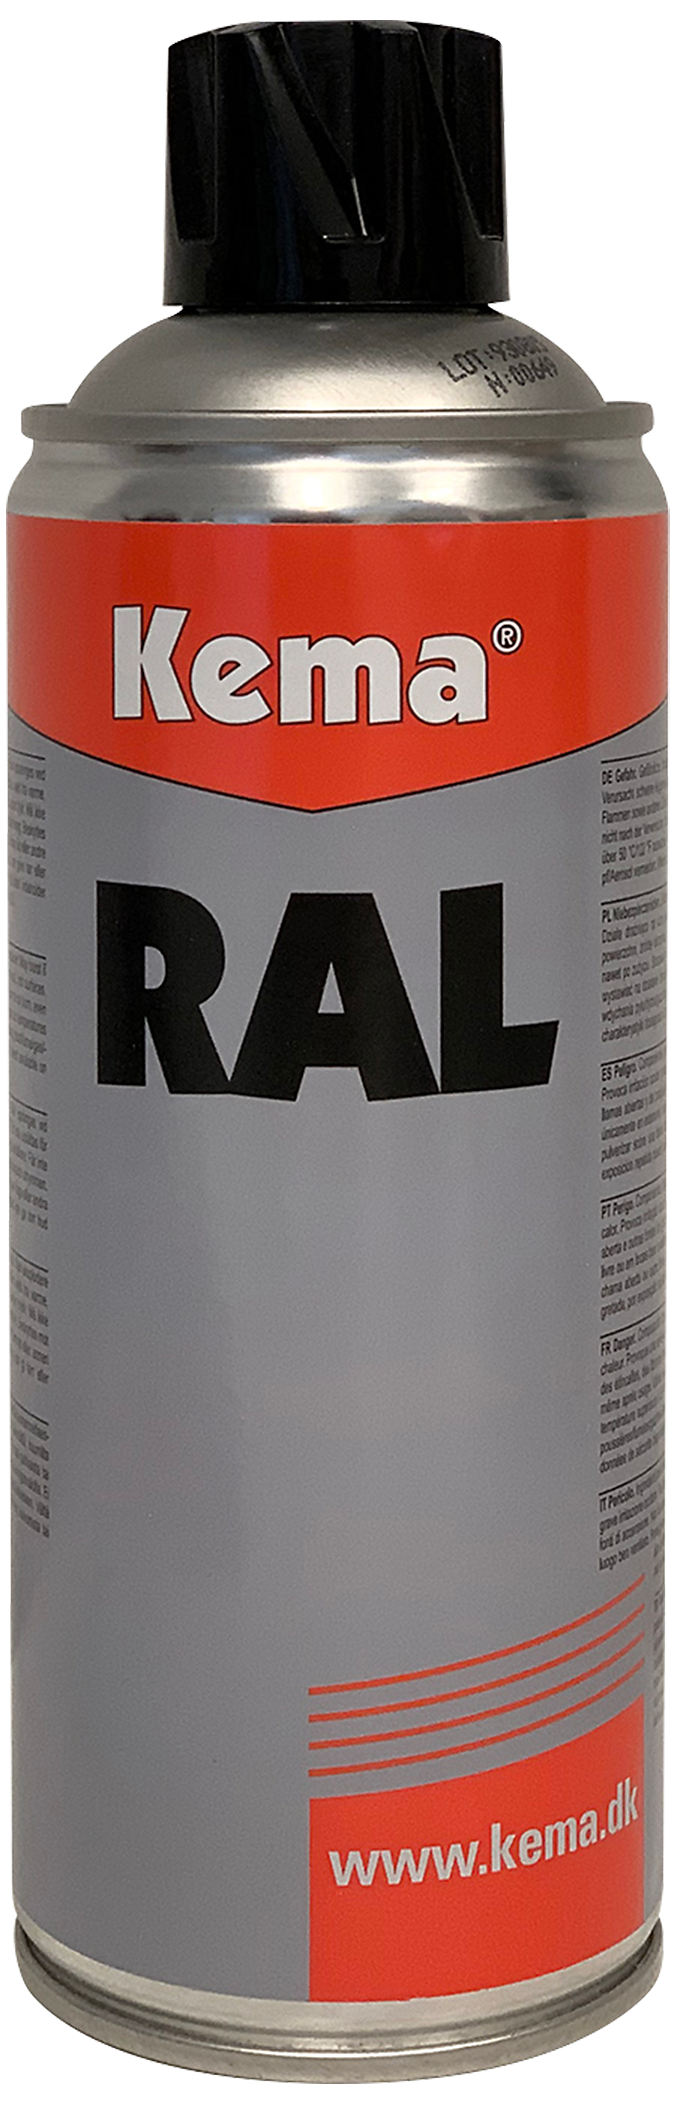 Kema industrilak RAL-5013 koboltblå spray 400ml 389388